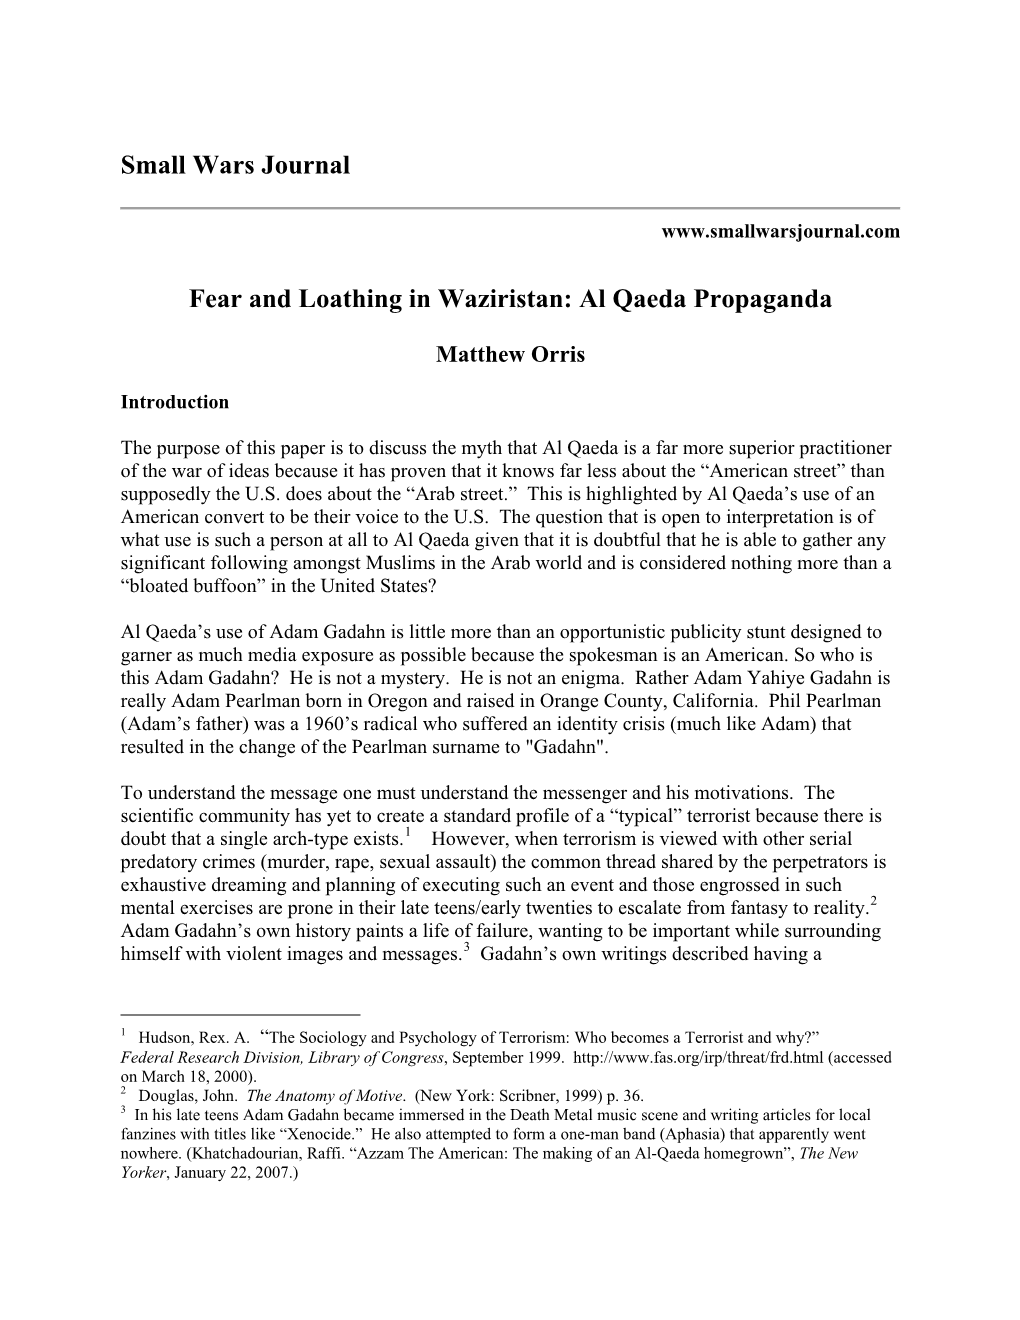 Small Wars Journal Fear and Loathing in Waziristan: Al Qaeda Propaganda